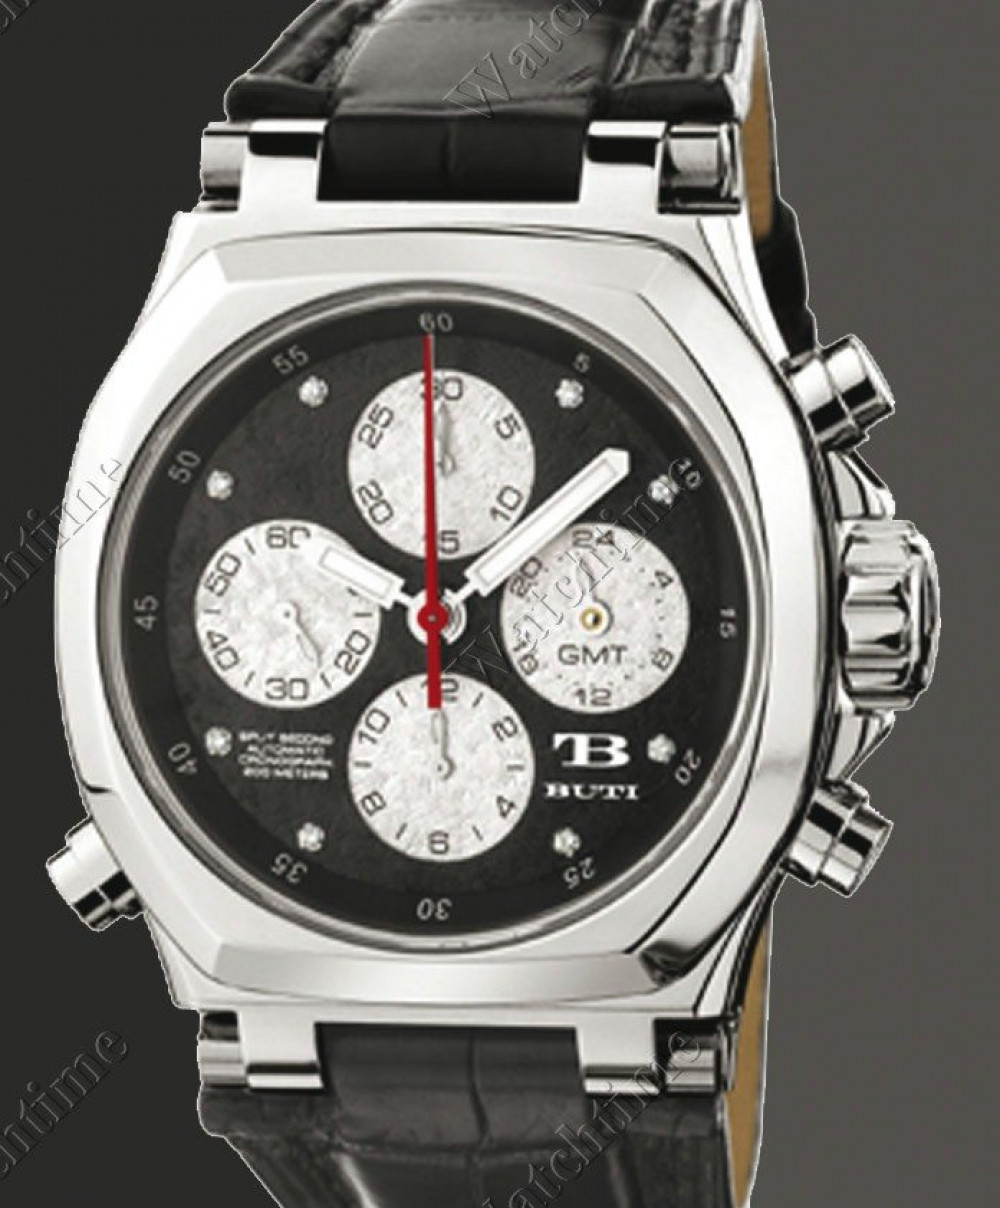 Zegarek firmy Buti, model Galileo